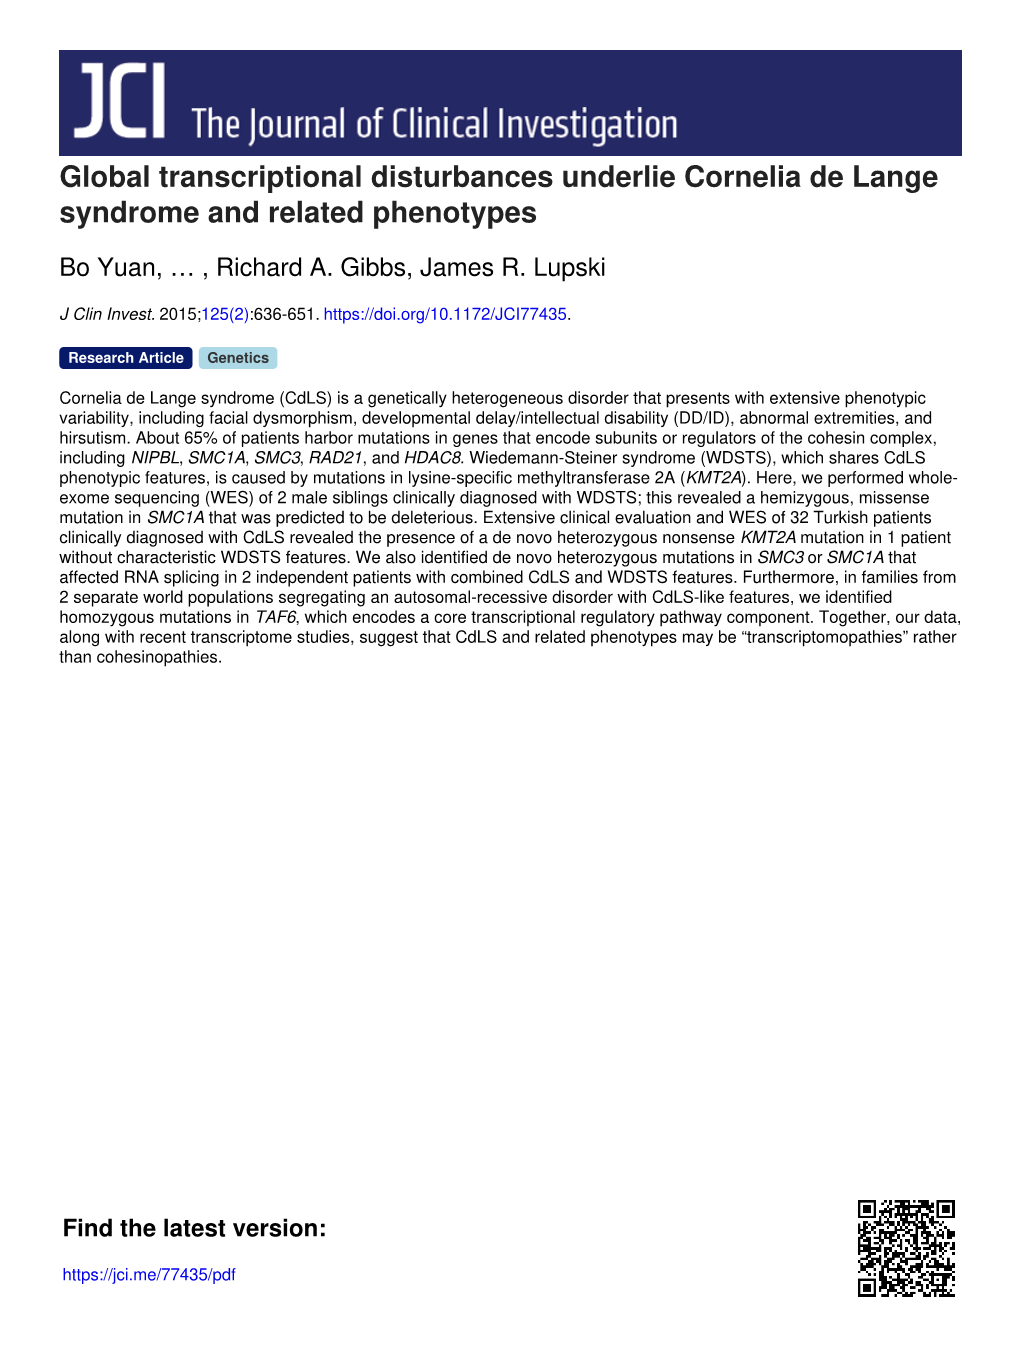 Global Transcriptional Disturbances Underlie Cornelia De Lange Syndrome and Related Phenotypes